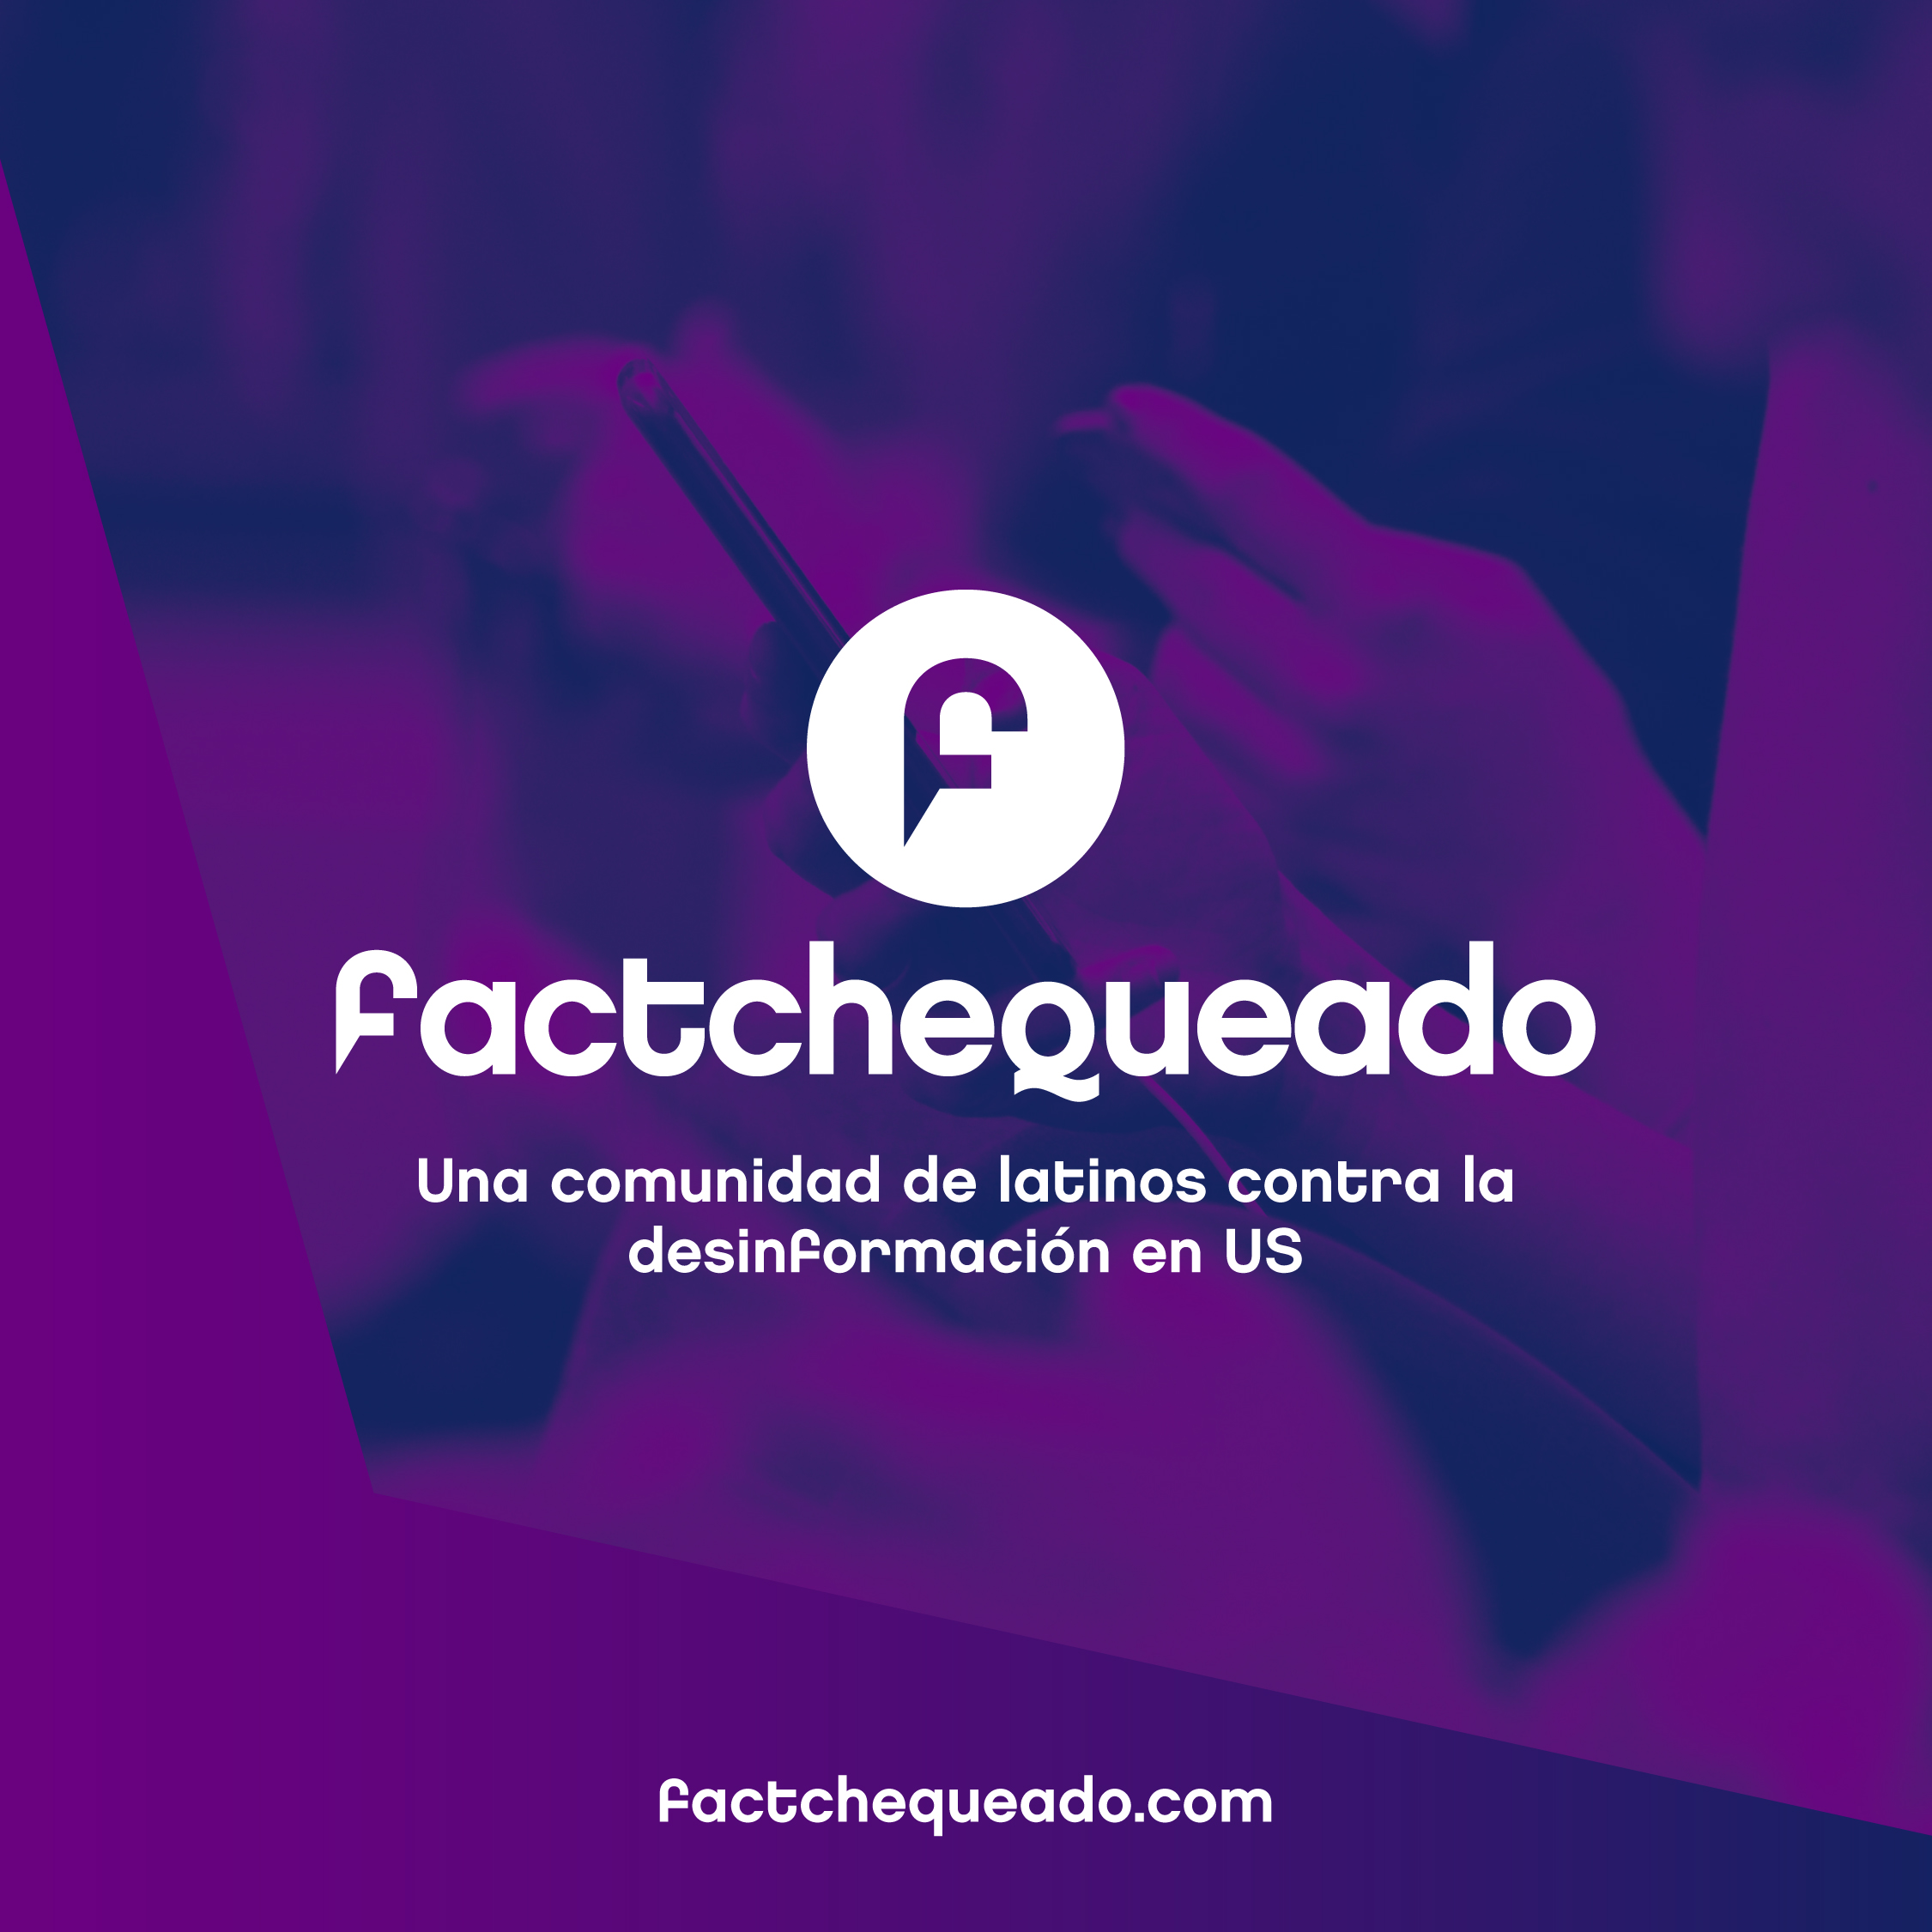 Factchequeado: スペイン語話者に対するフェイクニュースの影響